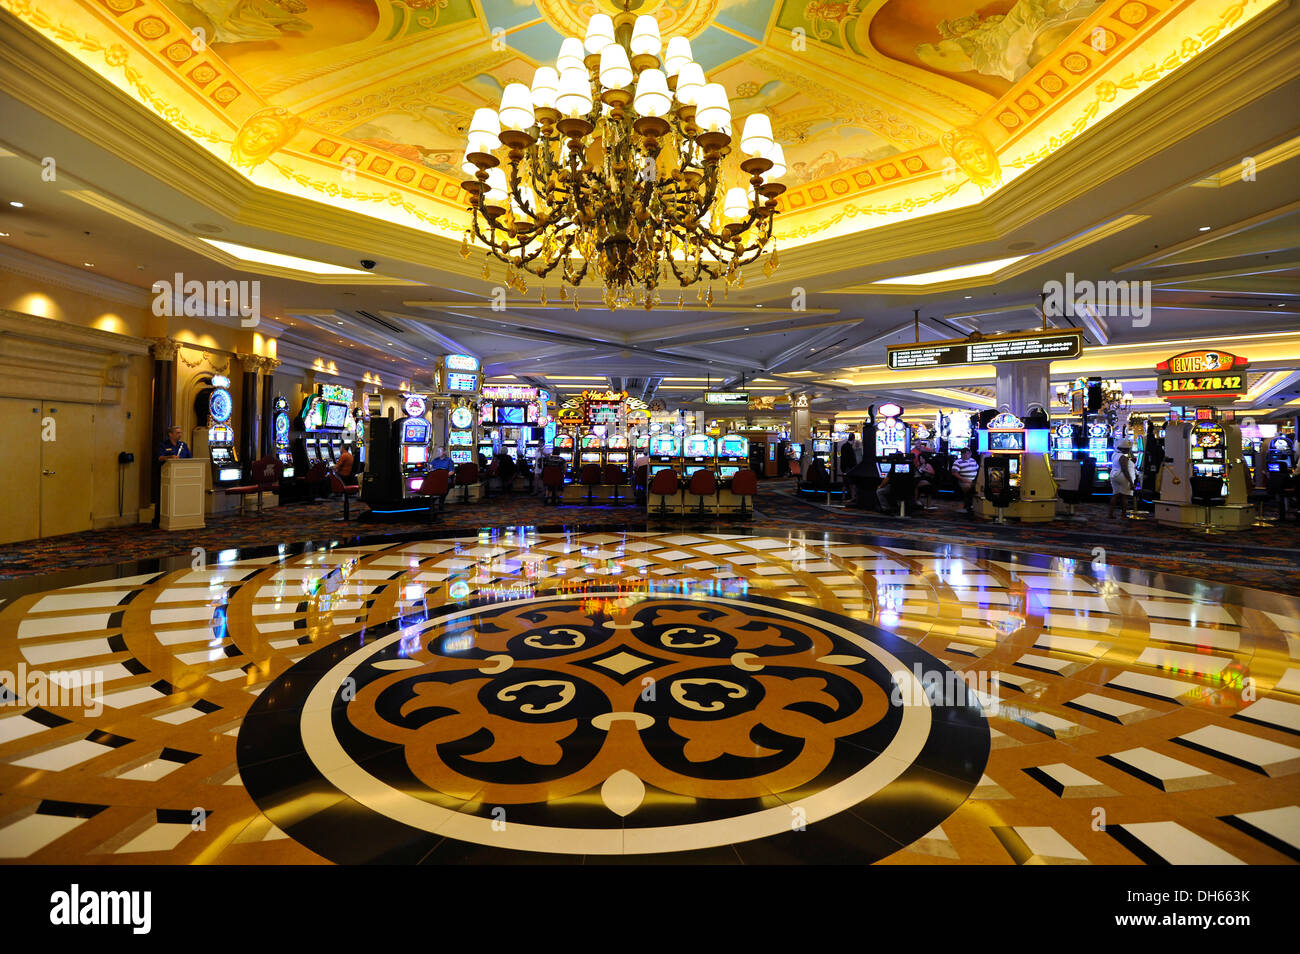 Casino, 5-star luxury hotel, The Venetian Casino, Las Vegas